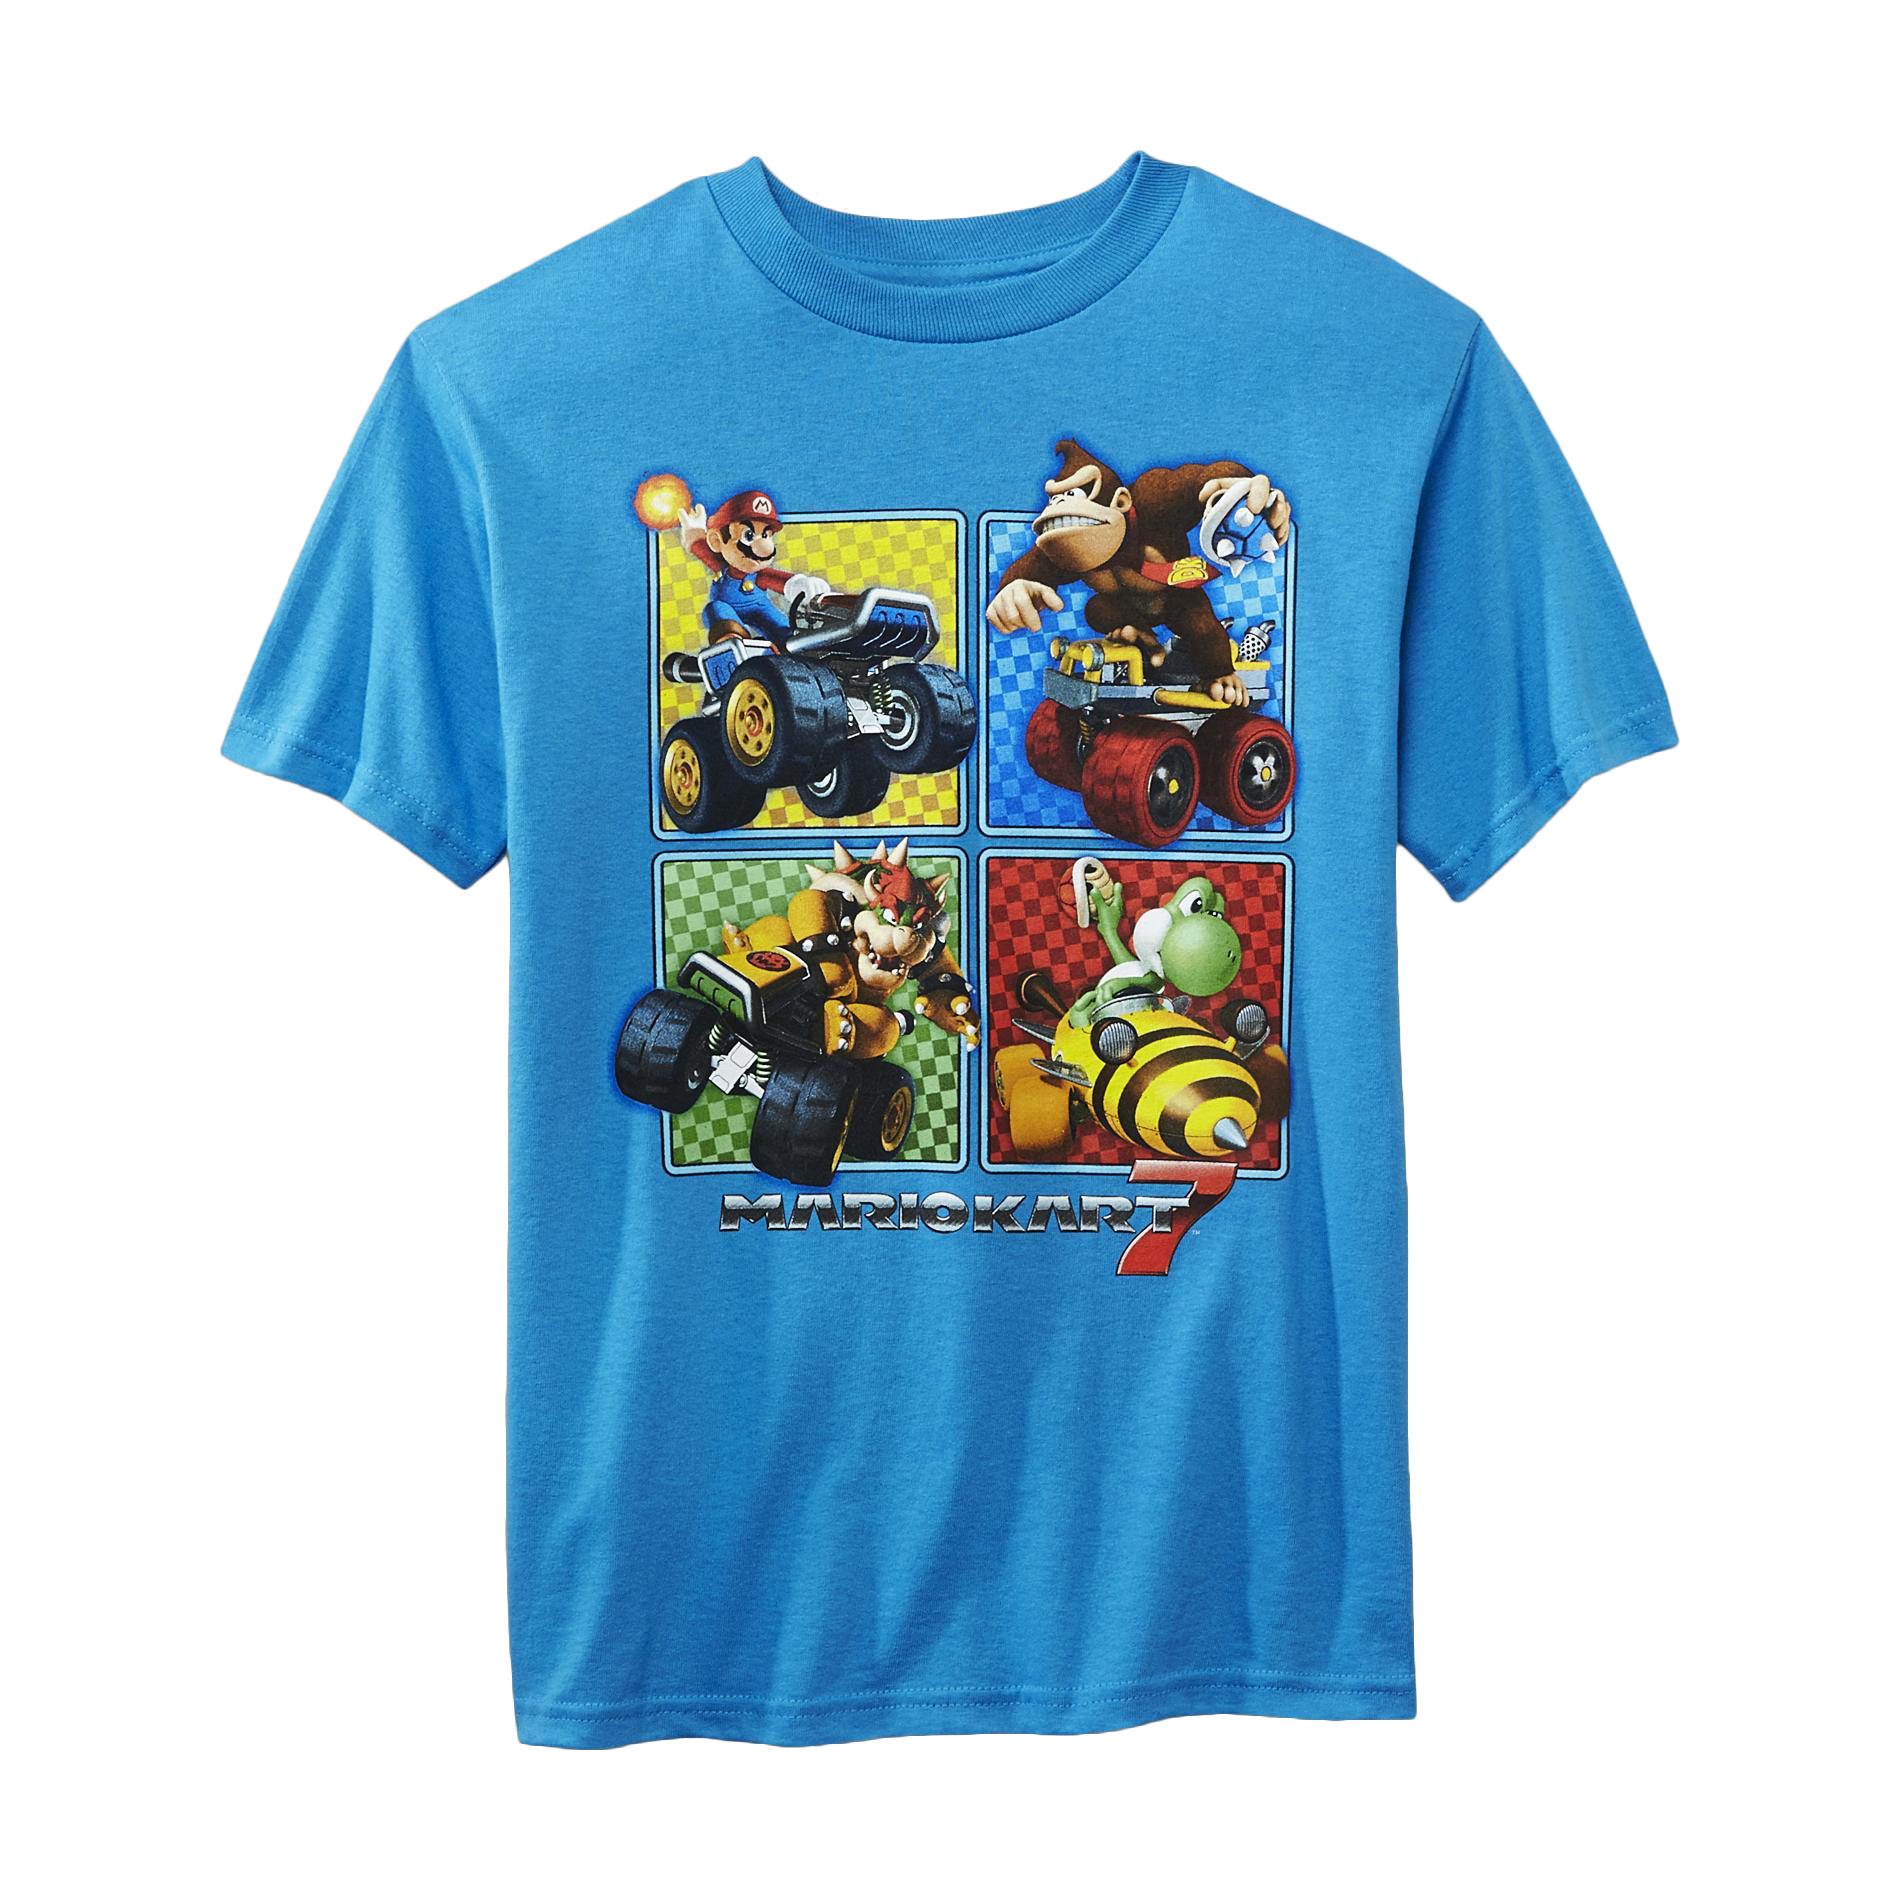 Nintendo Mario Kart 7 Boy's T-Shirt